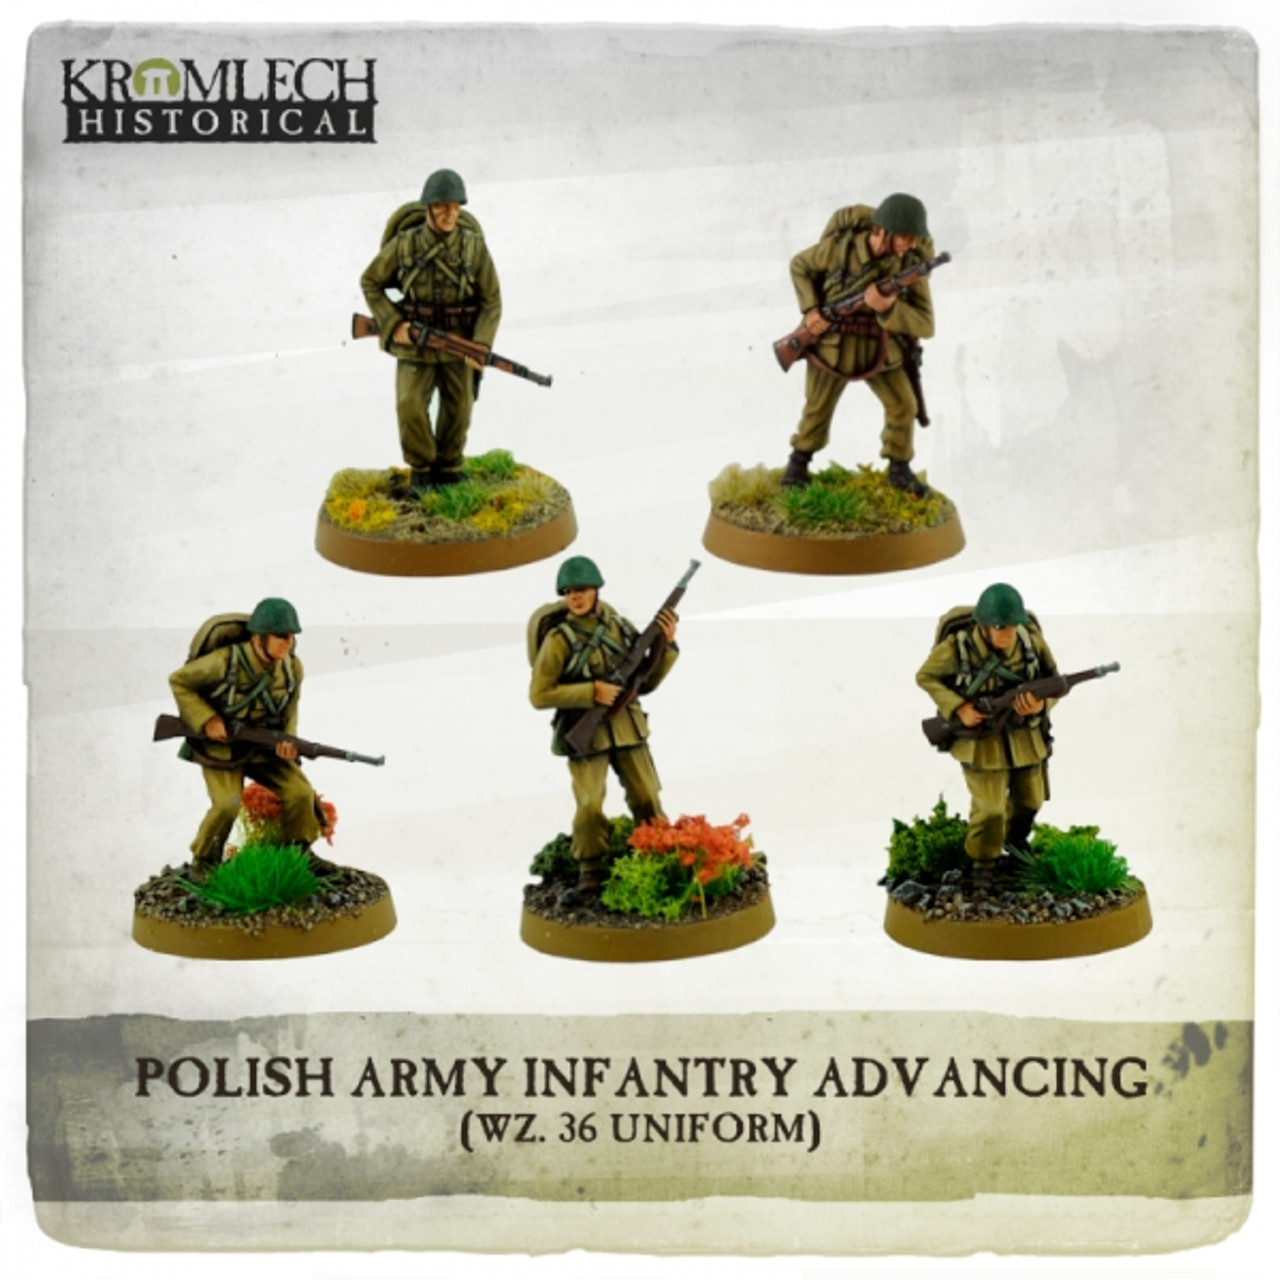 Polish Army Infantry (wz. 36 uniforms) advancing with rifles - KHWW2004 ...